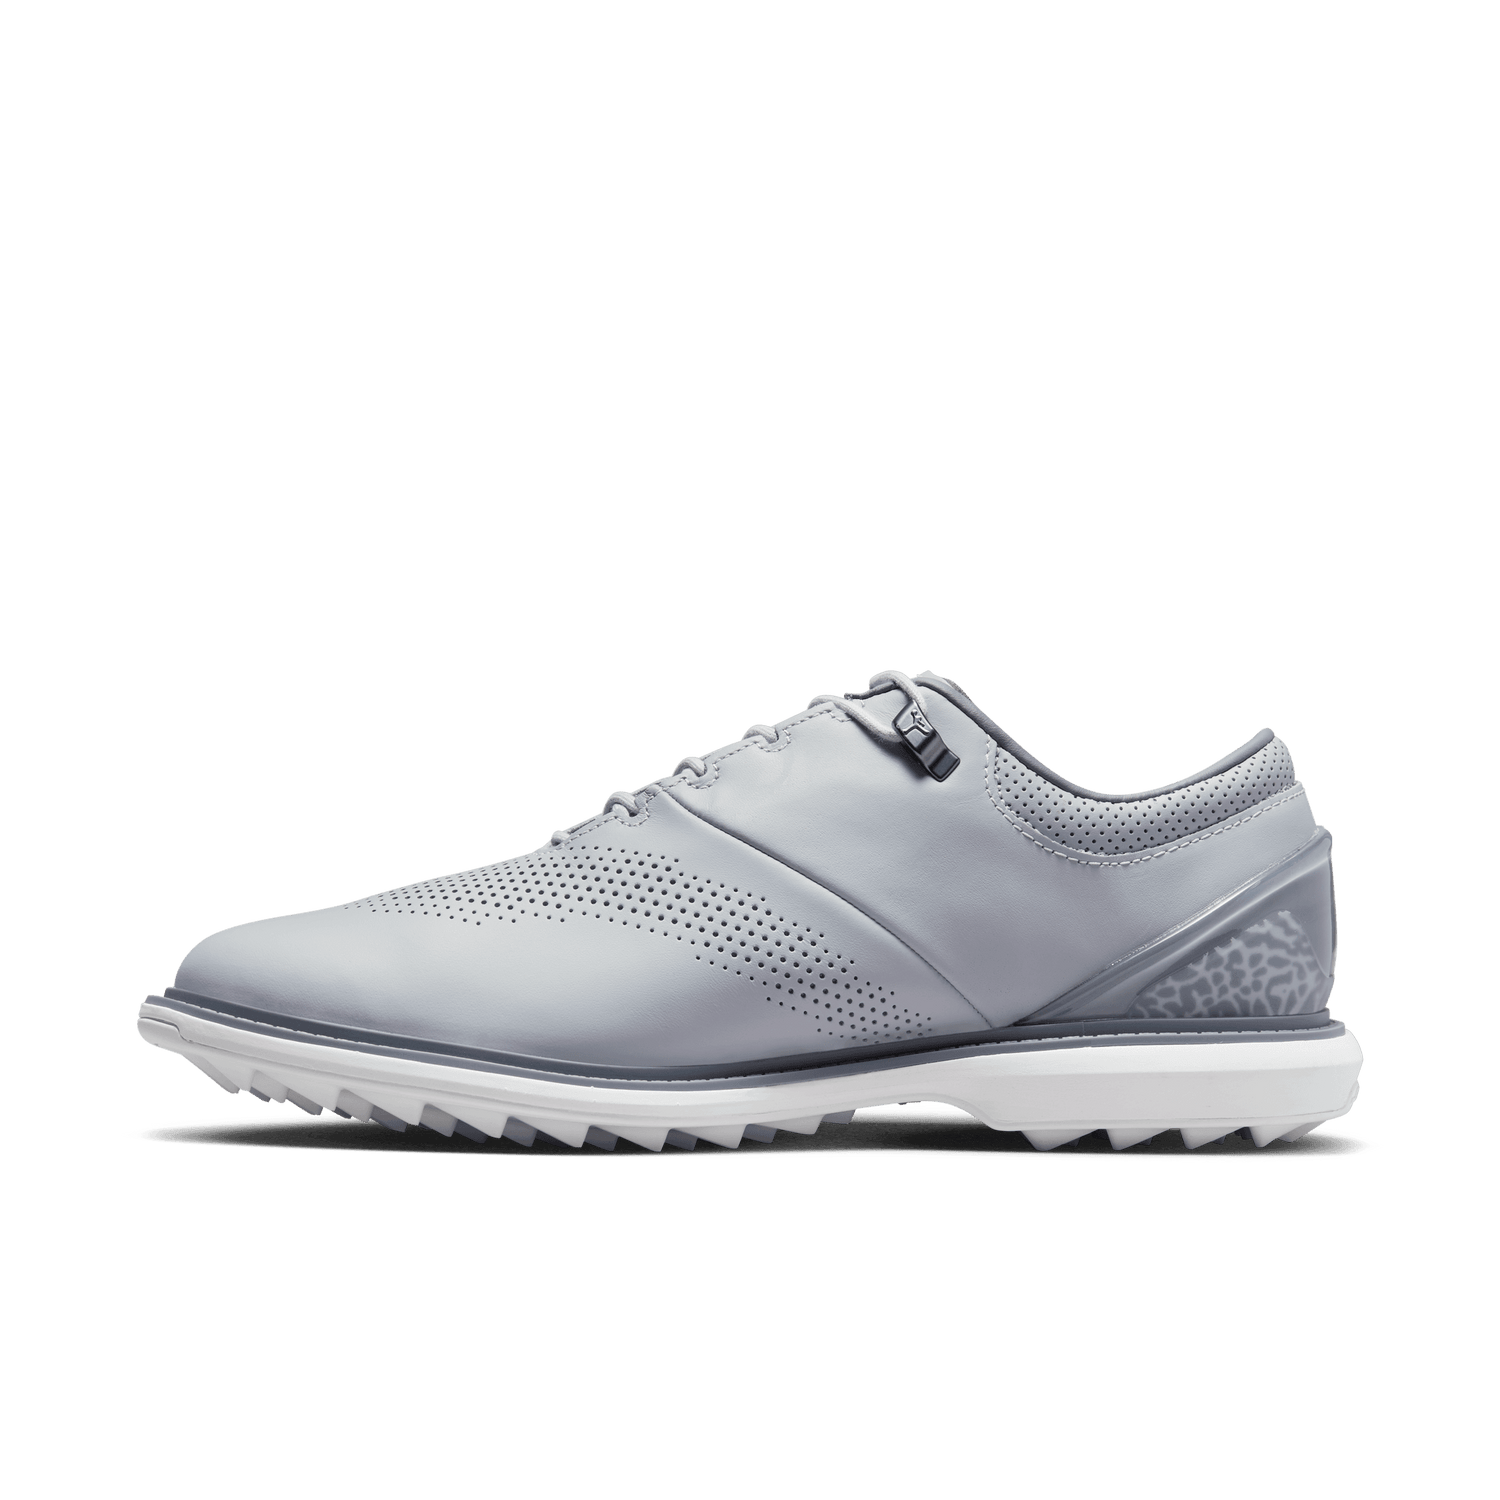 Nike Golf Jordan ADG 4 Spikeless Golf Shoes DM0103 Wolf Grey / White / Smoke Grey 010 11 